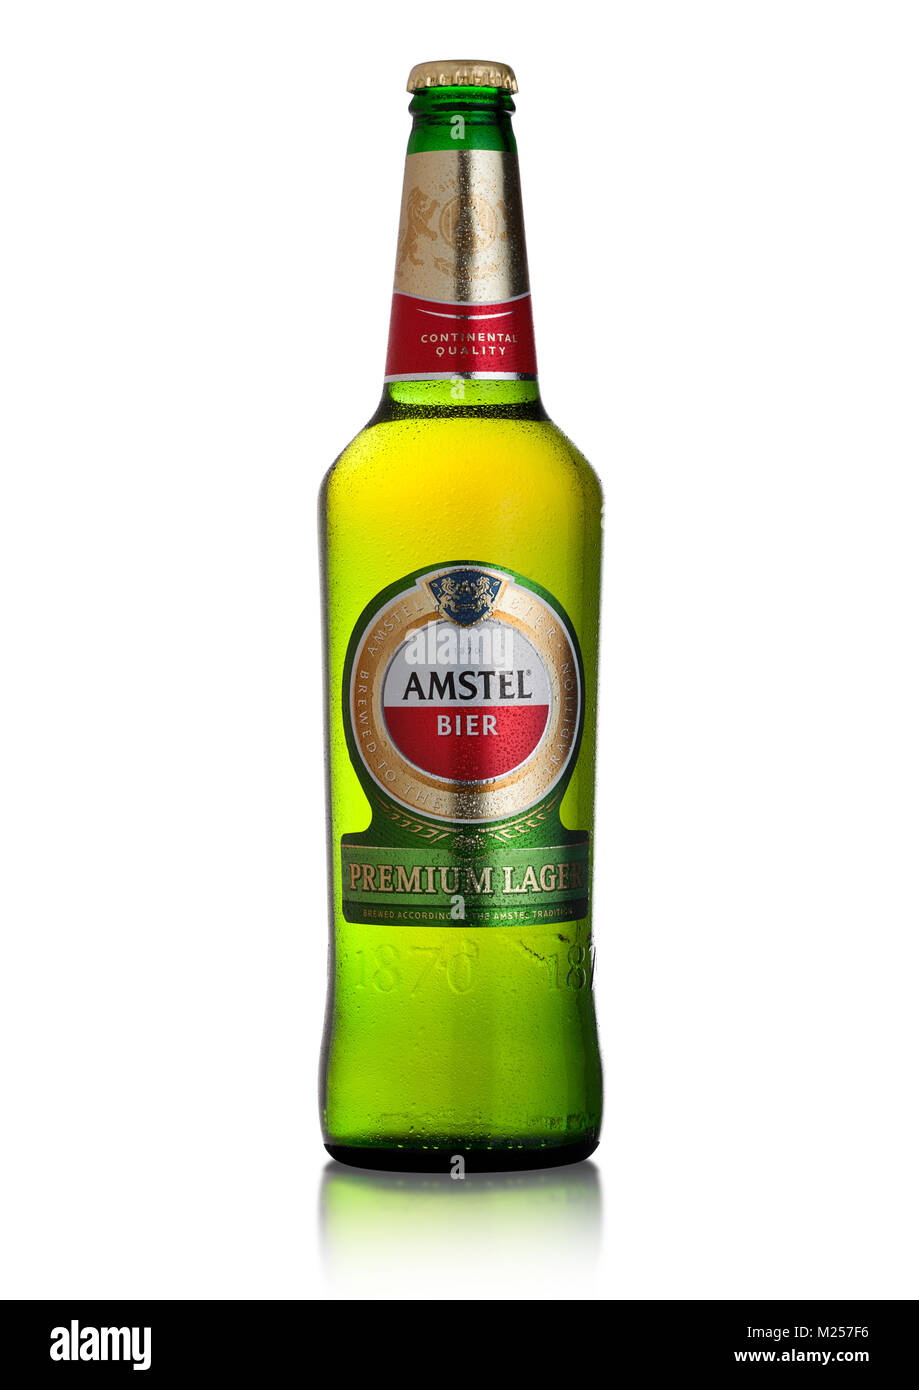 LONDON, UK - FEBRUARY 02, 2018: Cold bottle of Amstel Premium lager beer on white background. Stock Photo